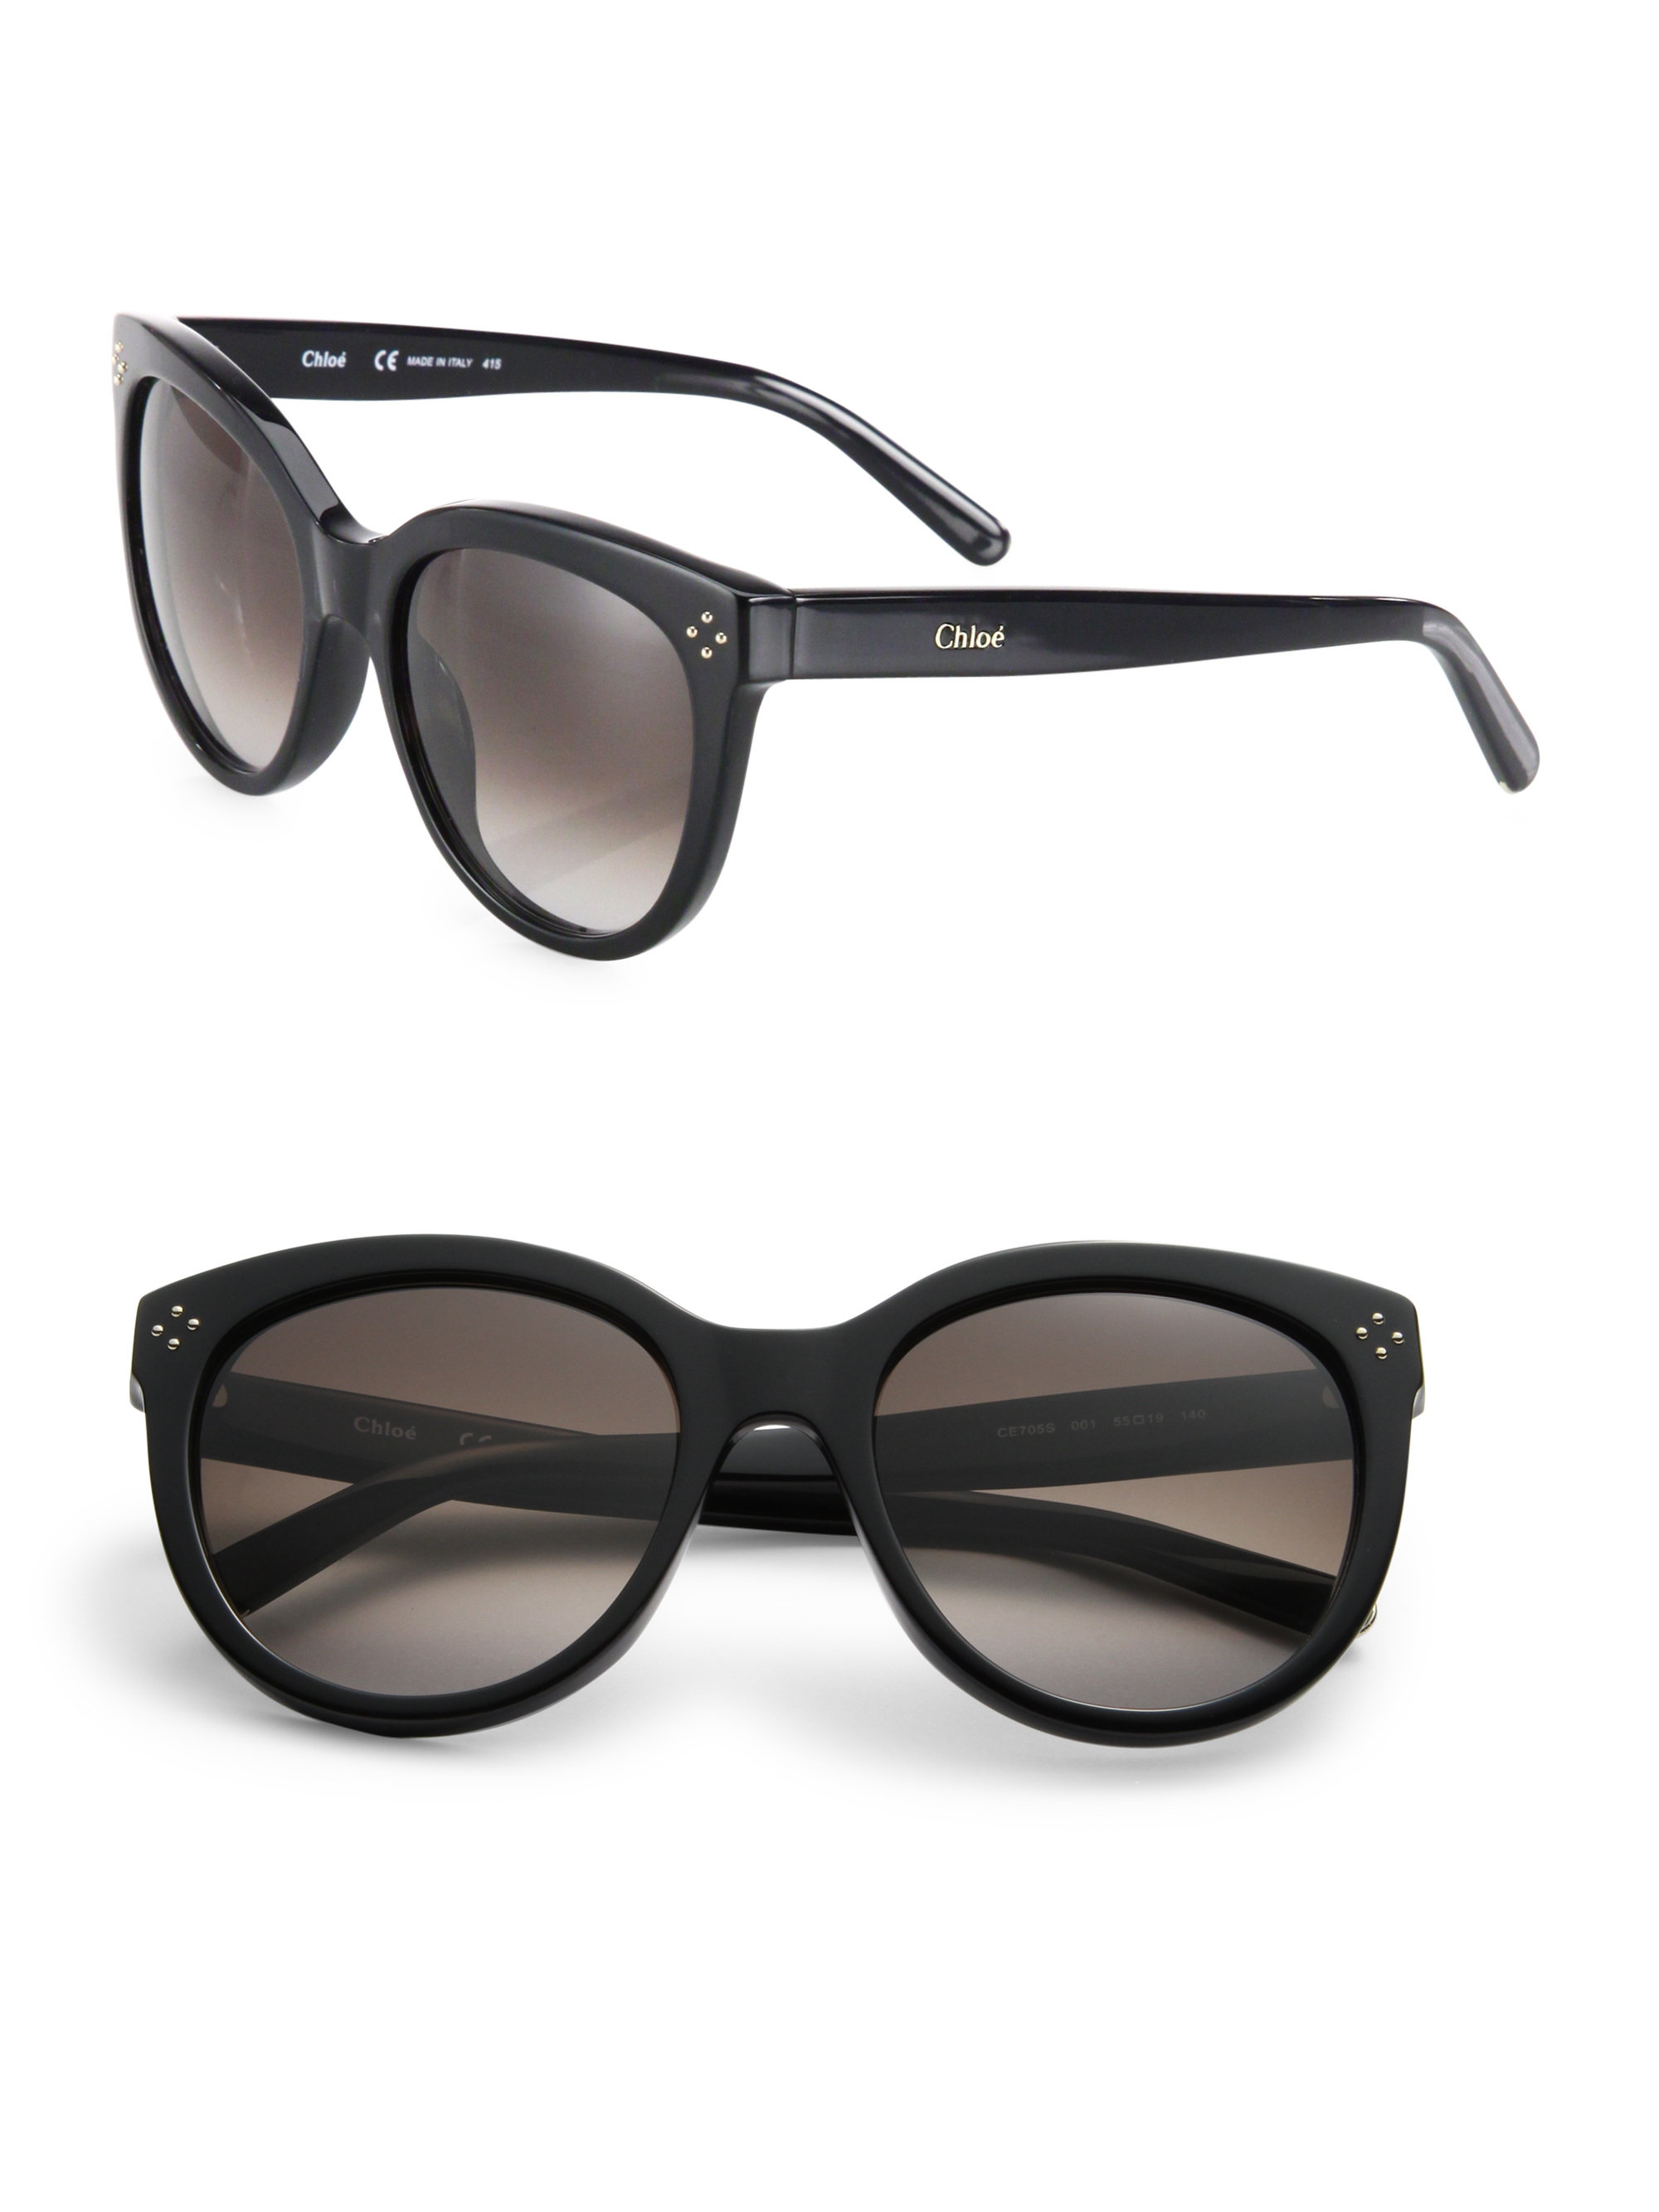 Chloé Boxwood 55mm Cat's-eye Sunglasses in Black | Lyst